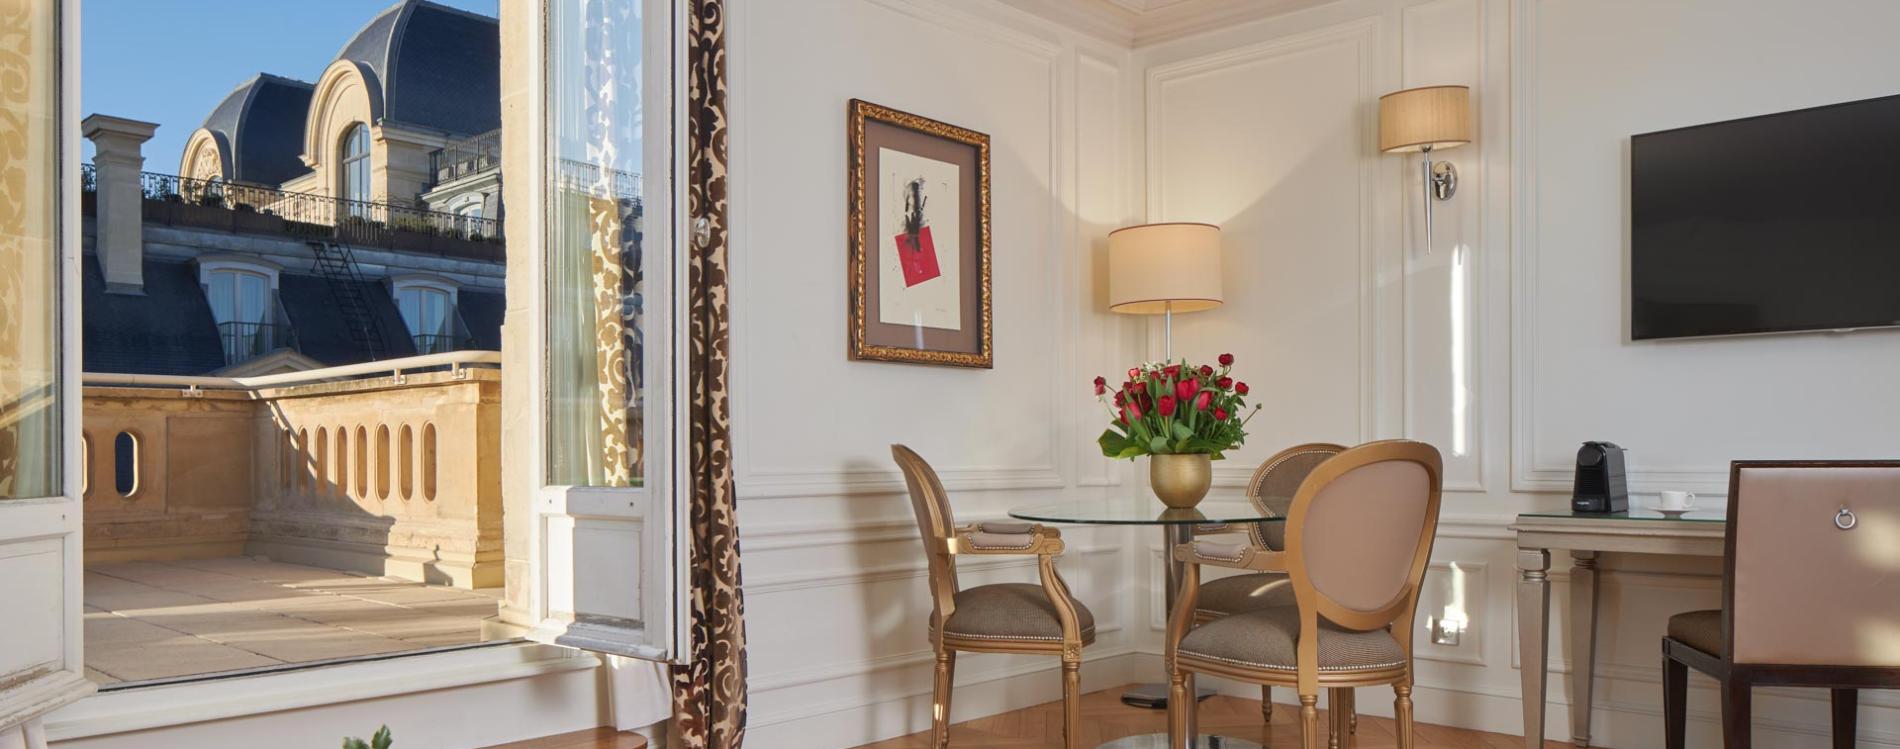 LUXURY LIVING GROUP REFURBISHES PARIS STORE - Luxury Living Group